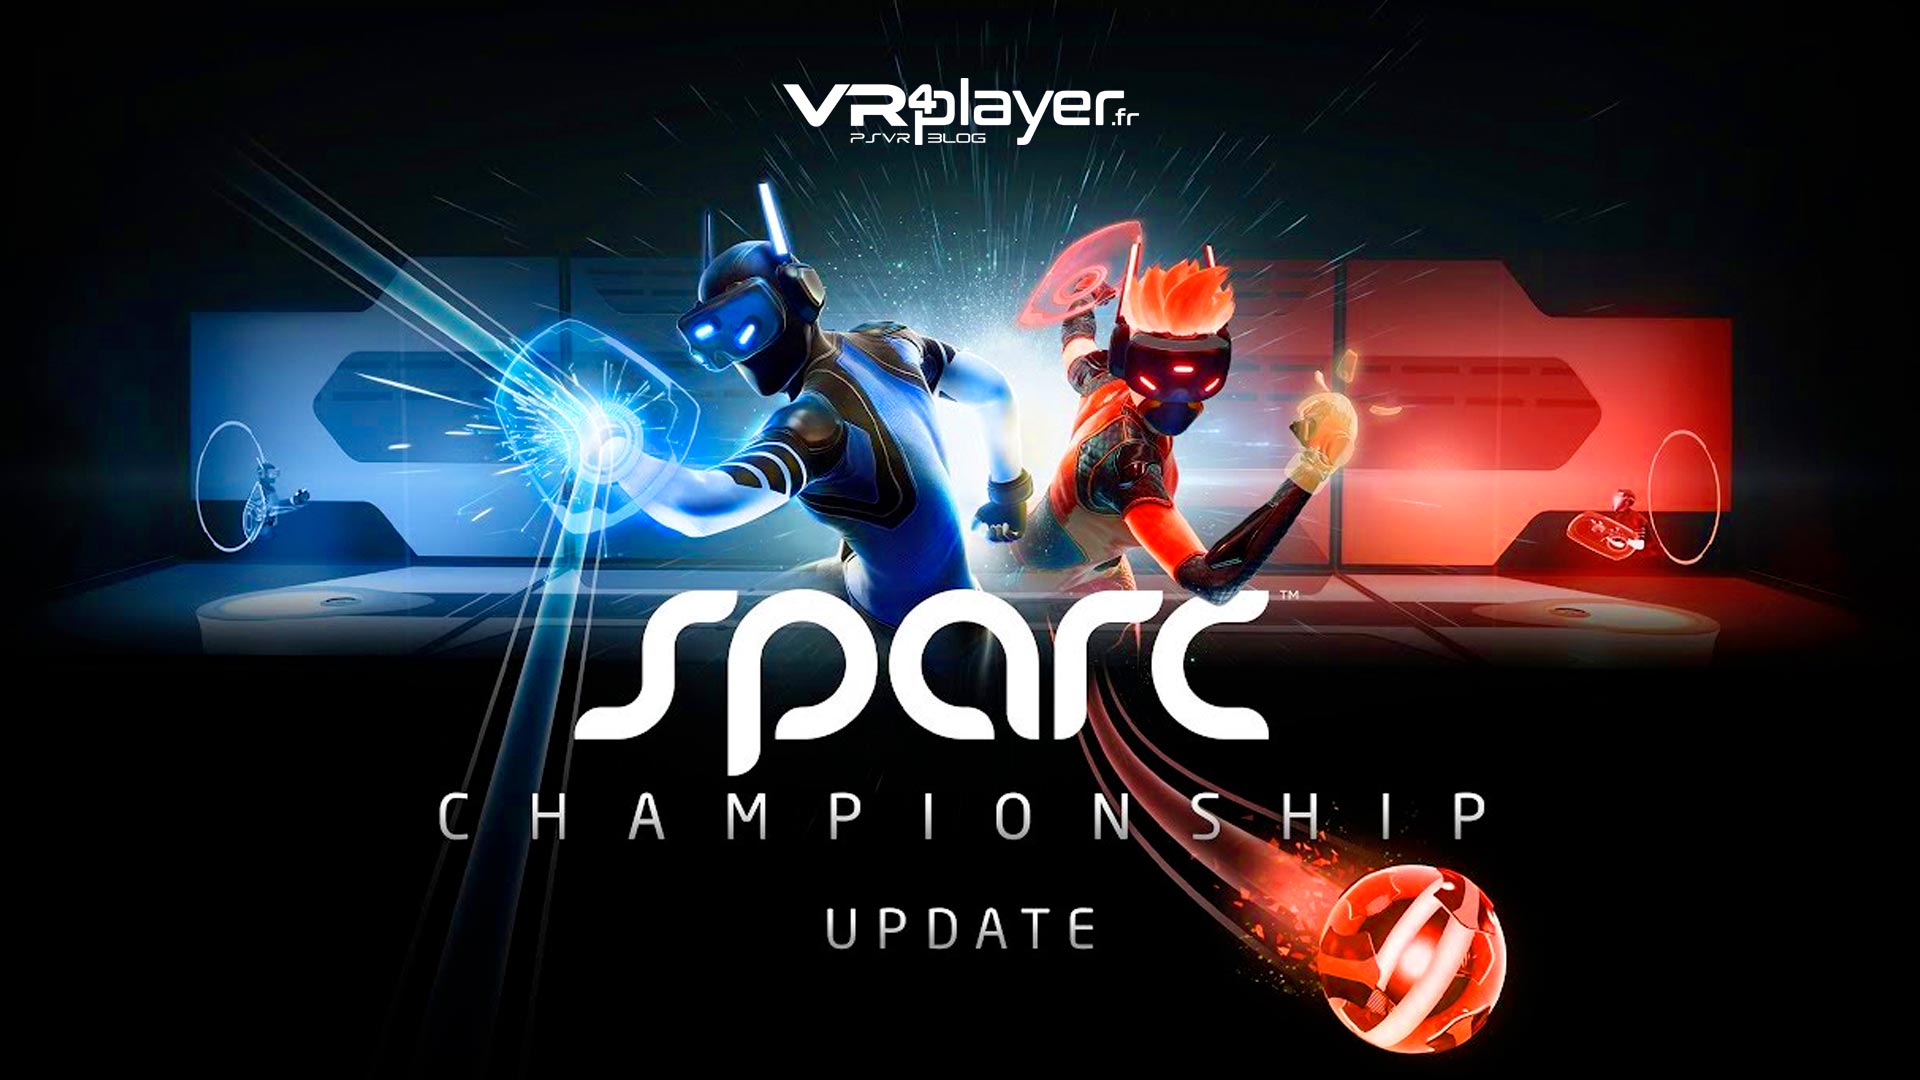 Sparc CHampionship PSVR VR4player